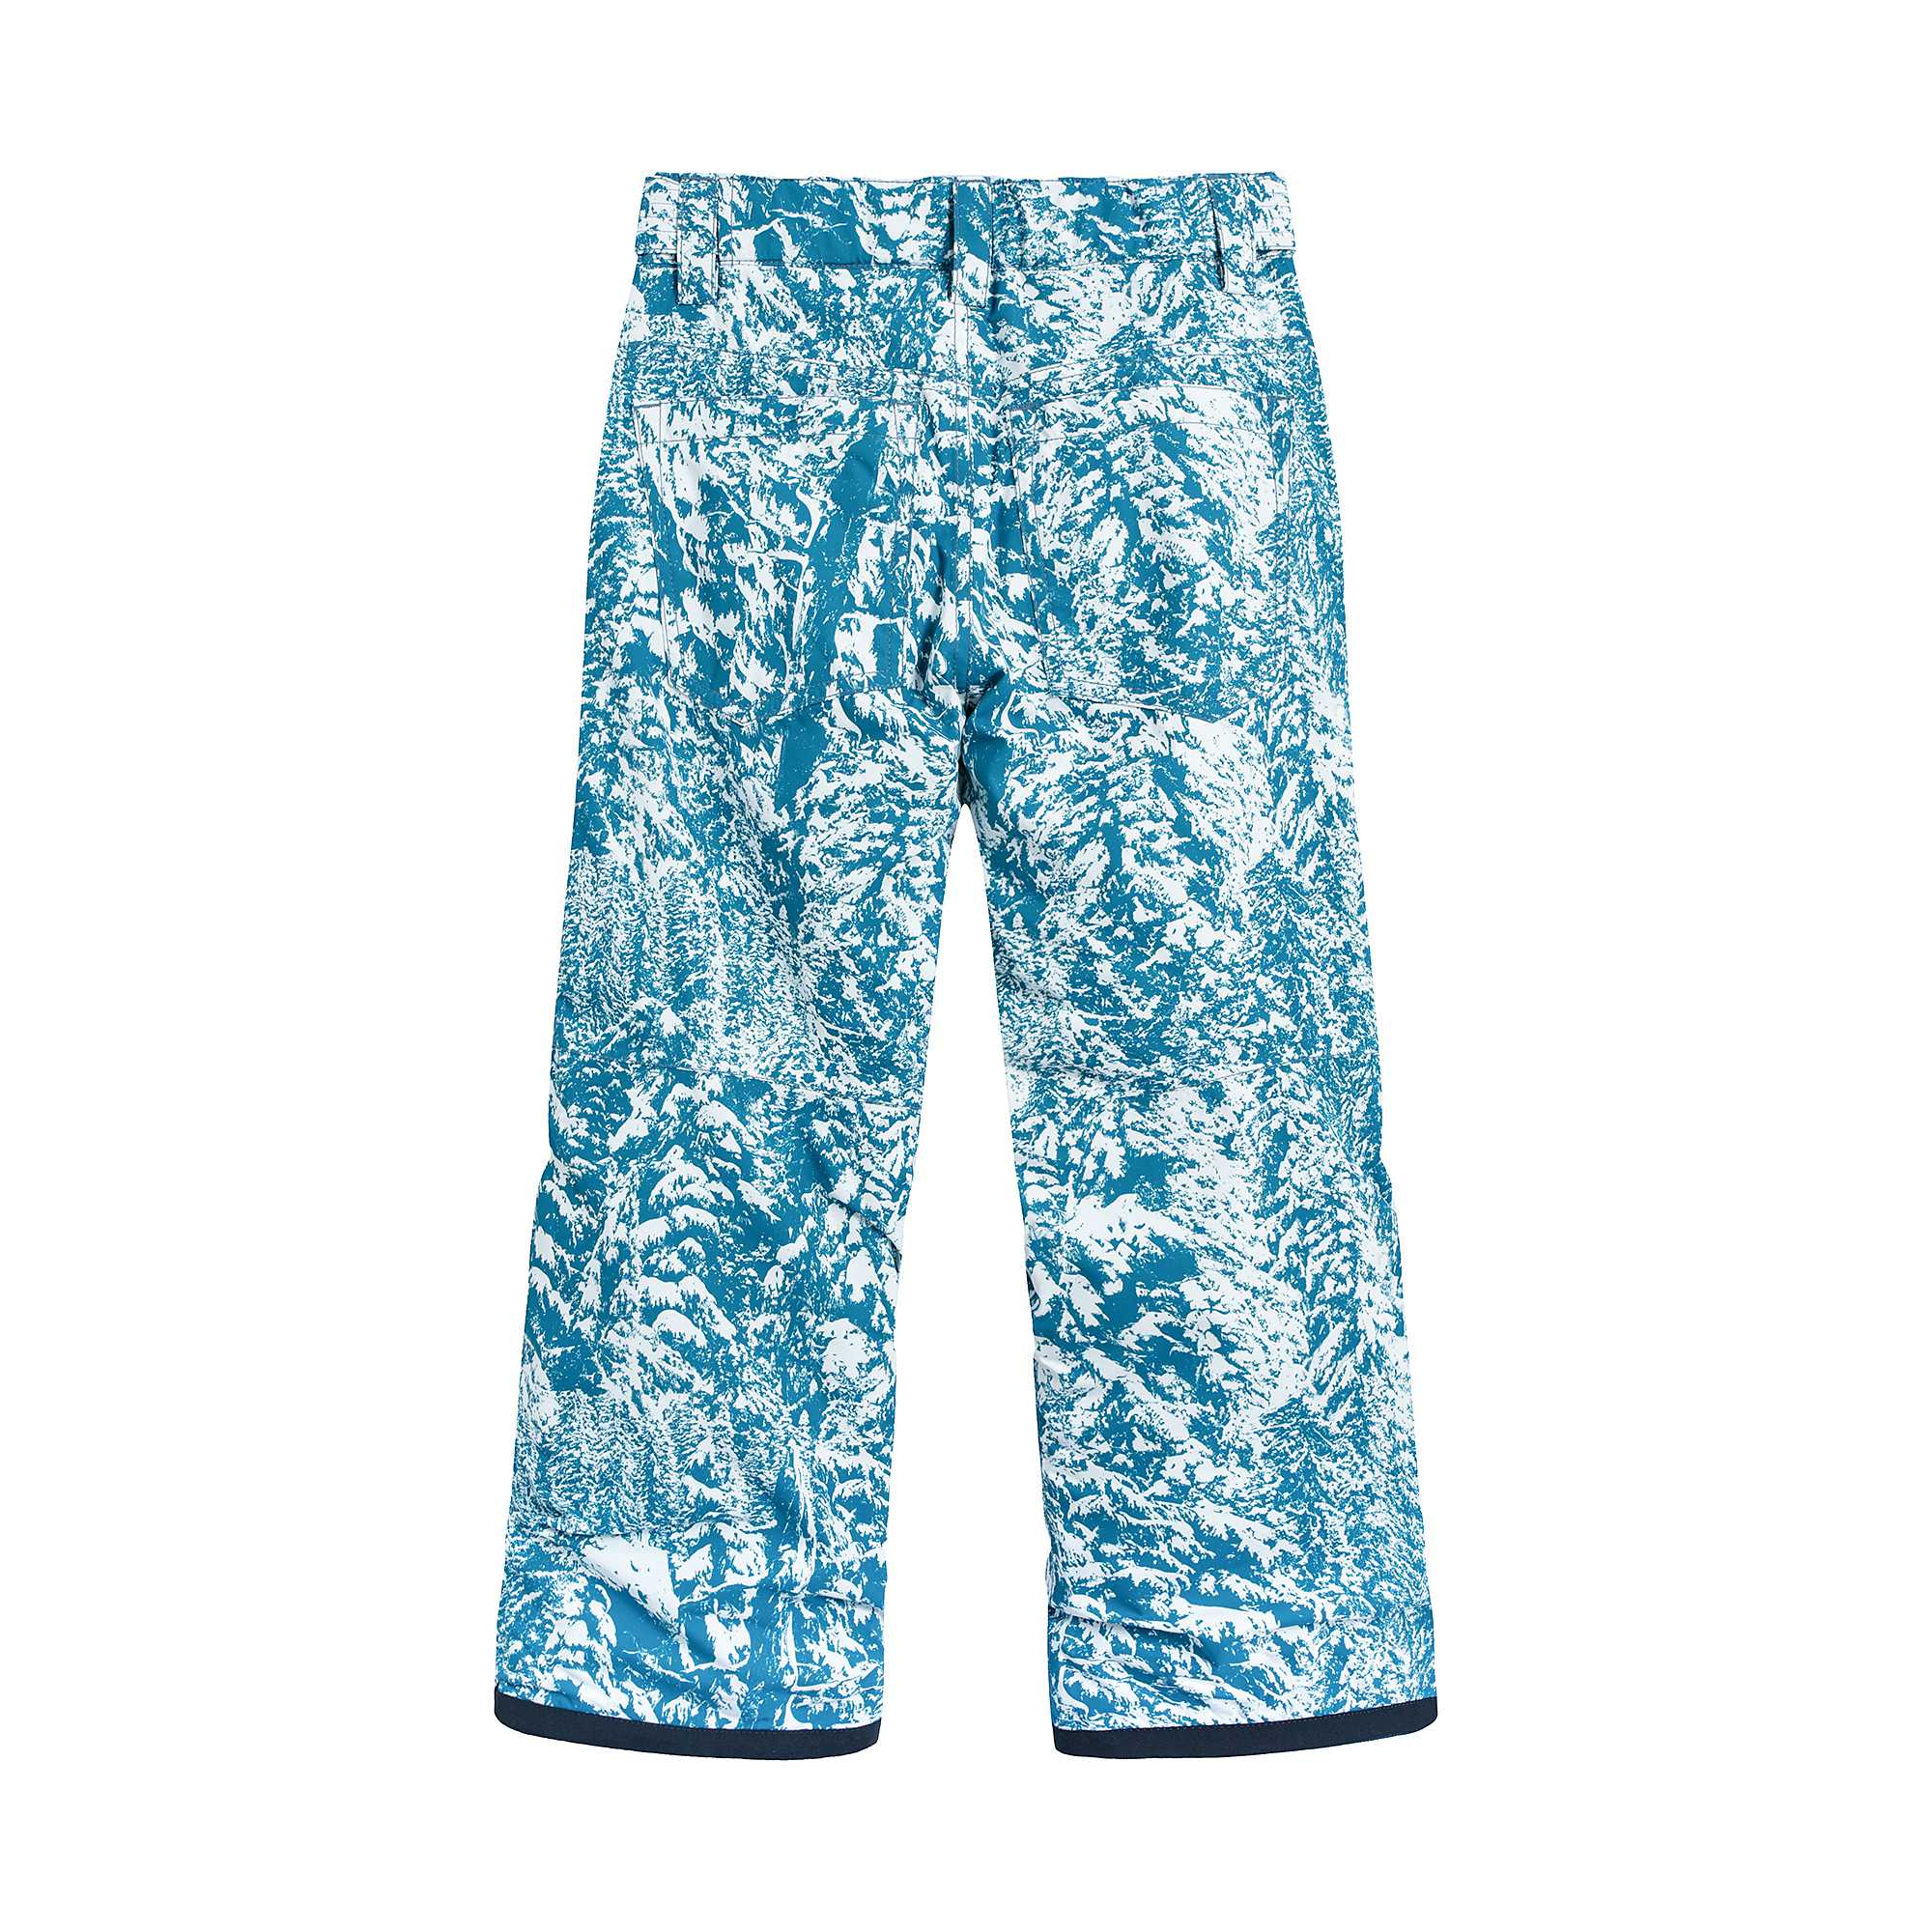 Boys Blue Printed Ski Trousers